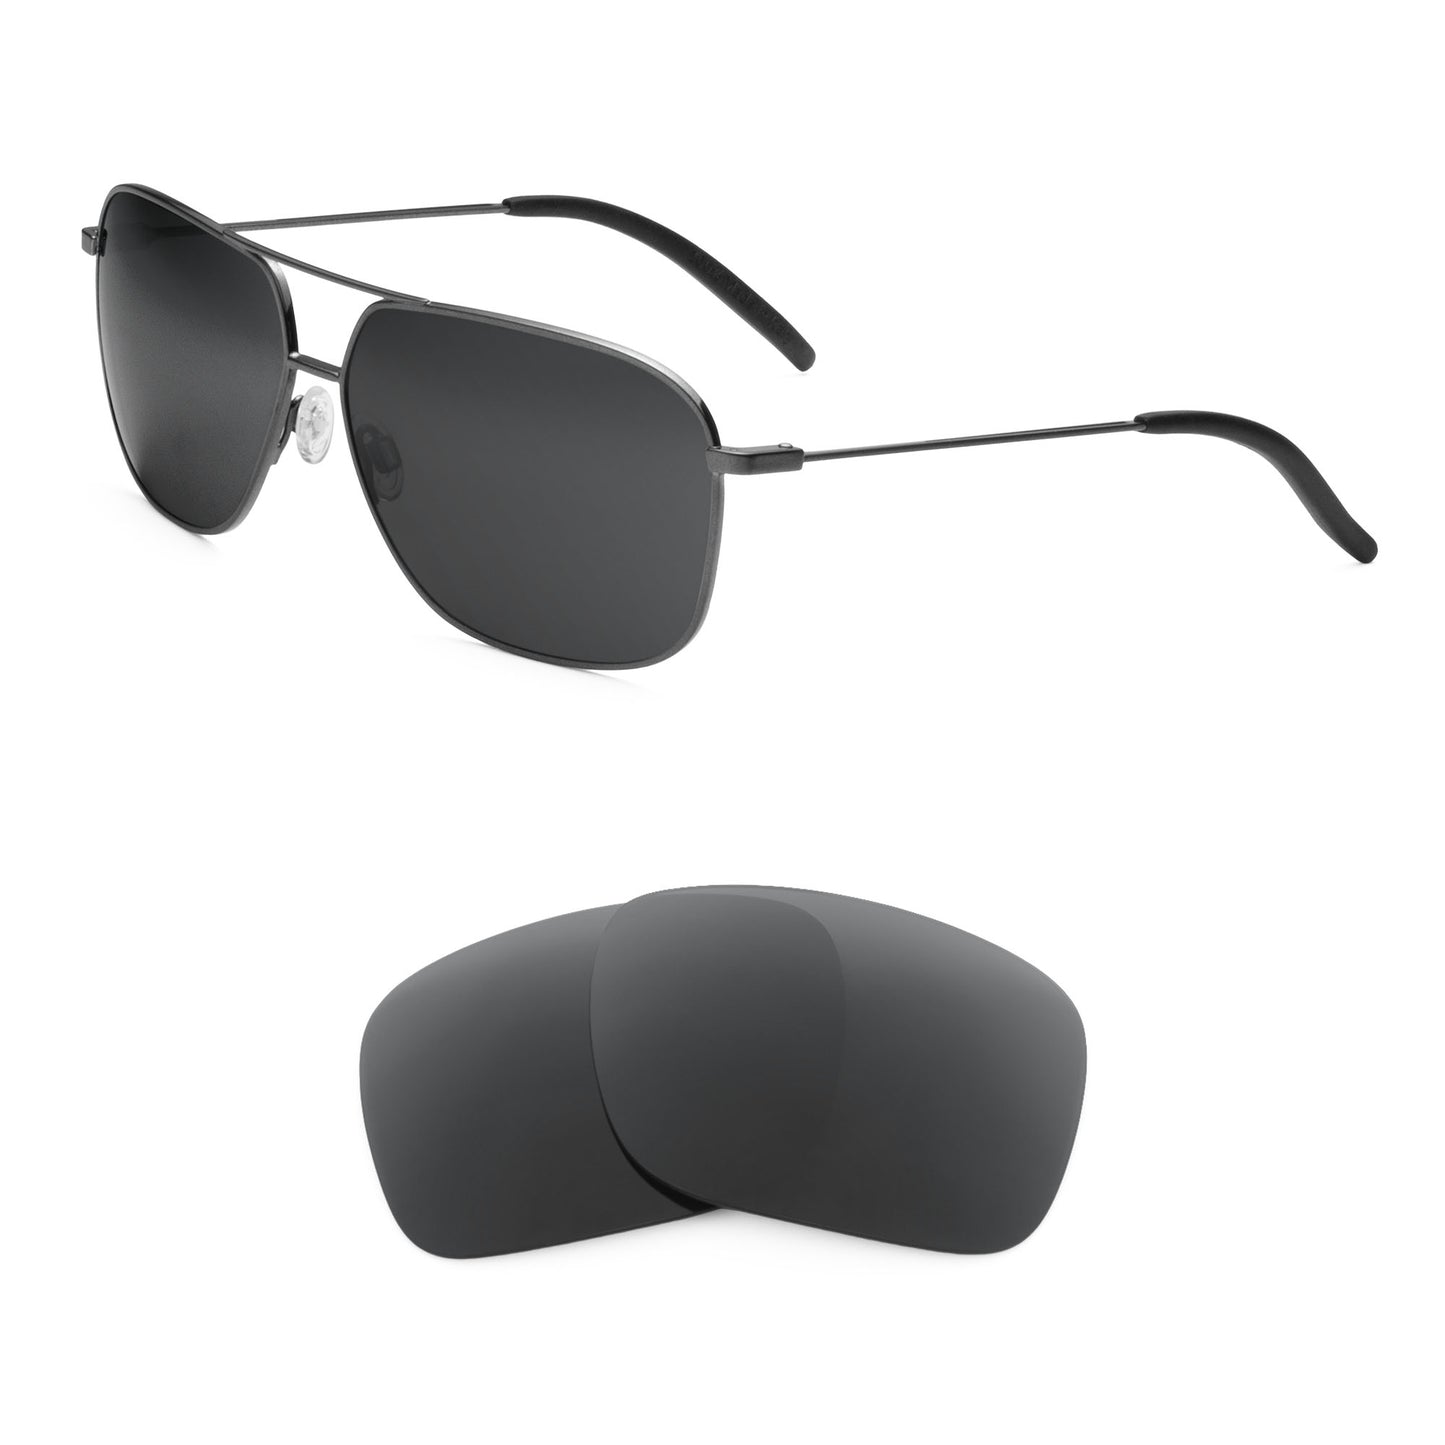 Maui Jim Kami MJ778 sunglasses with replacement lenses